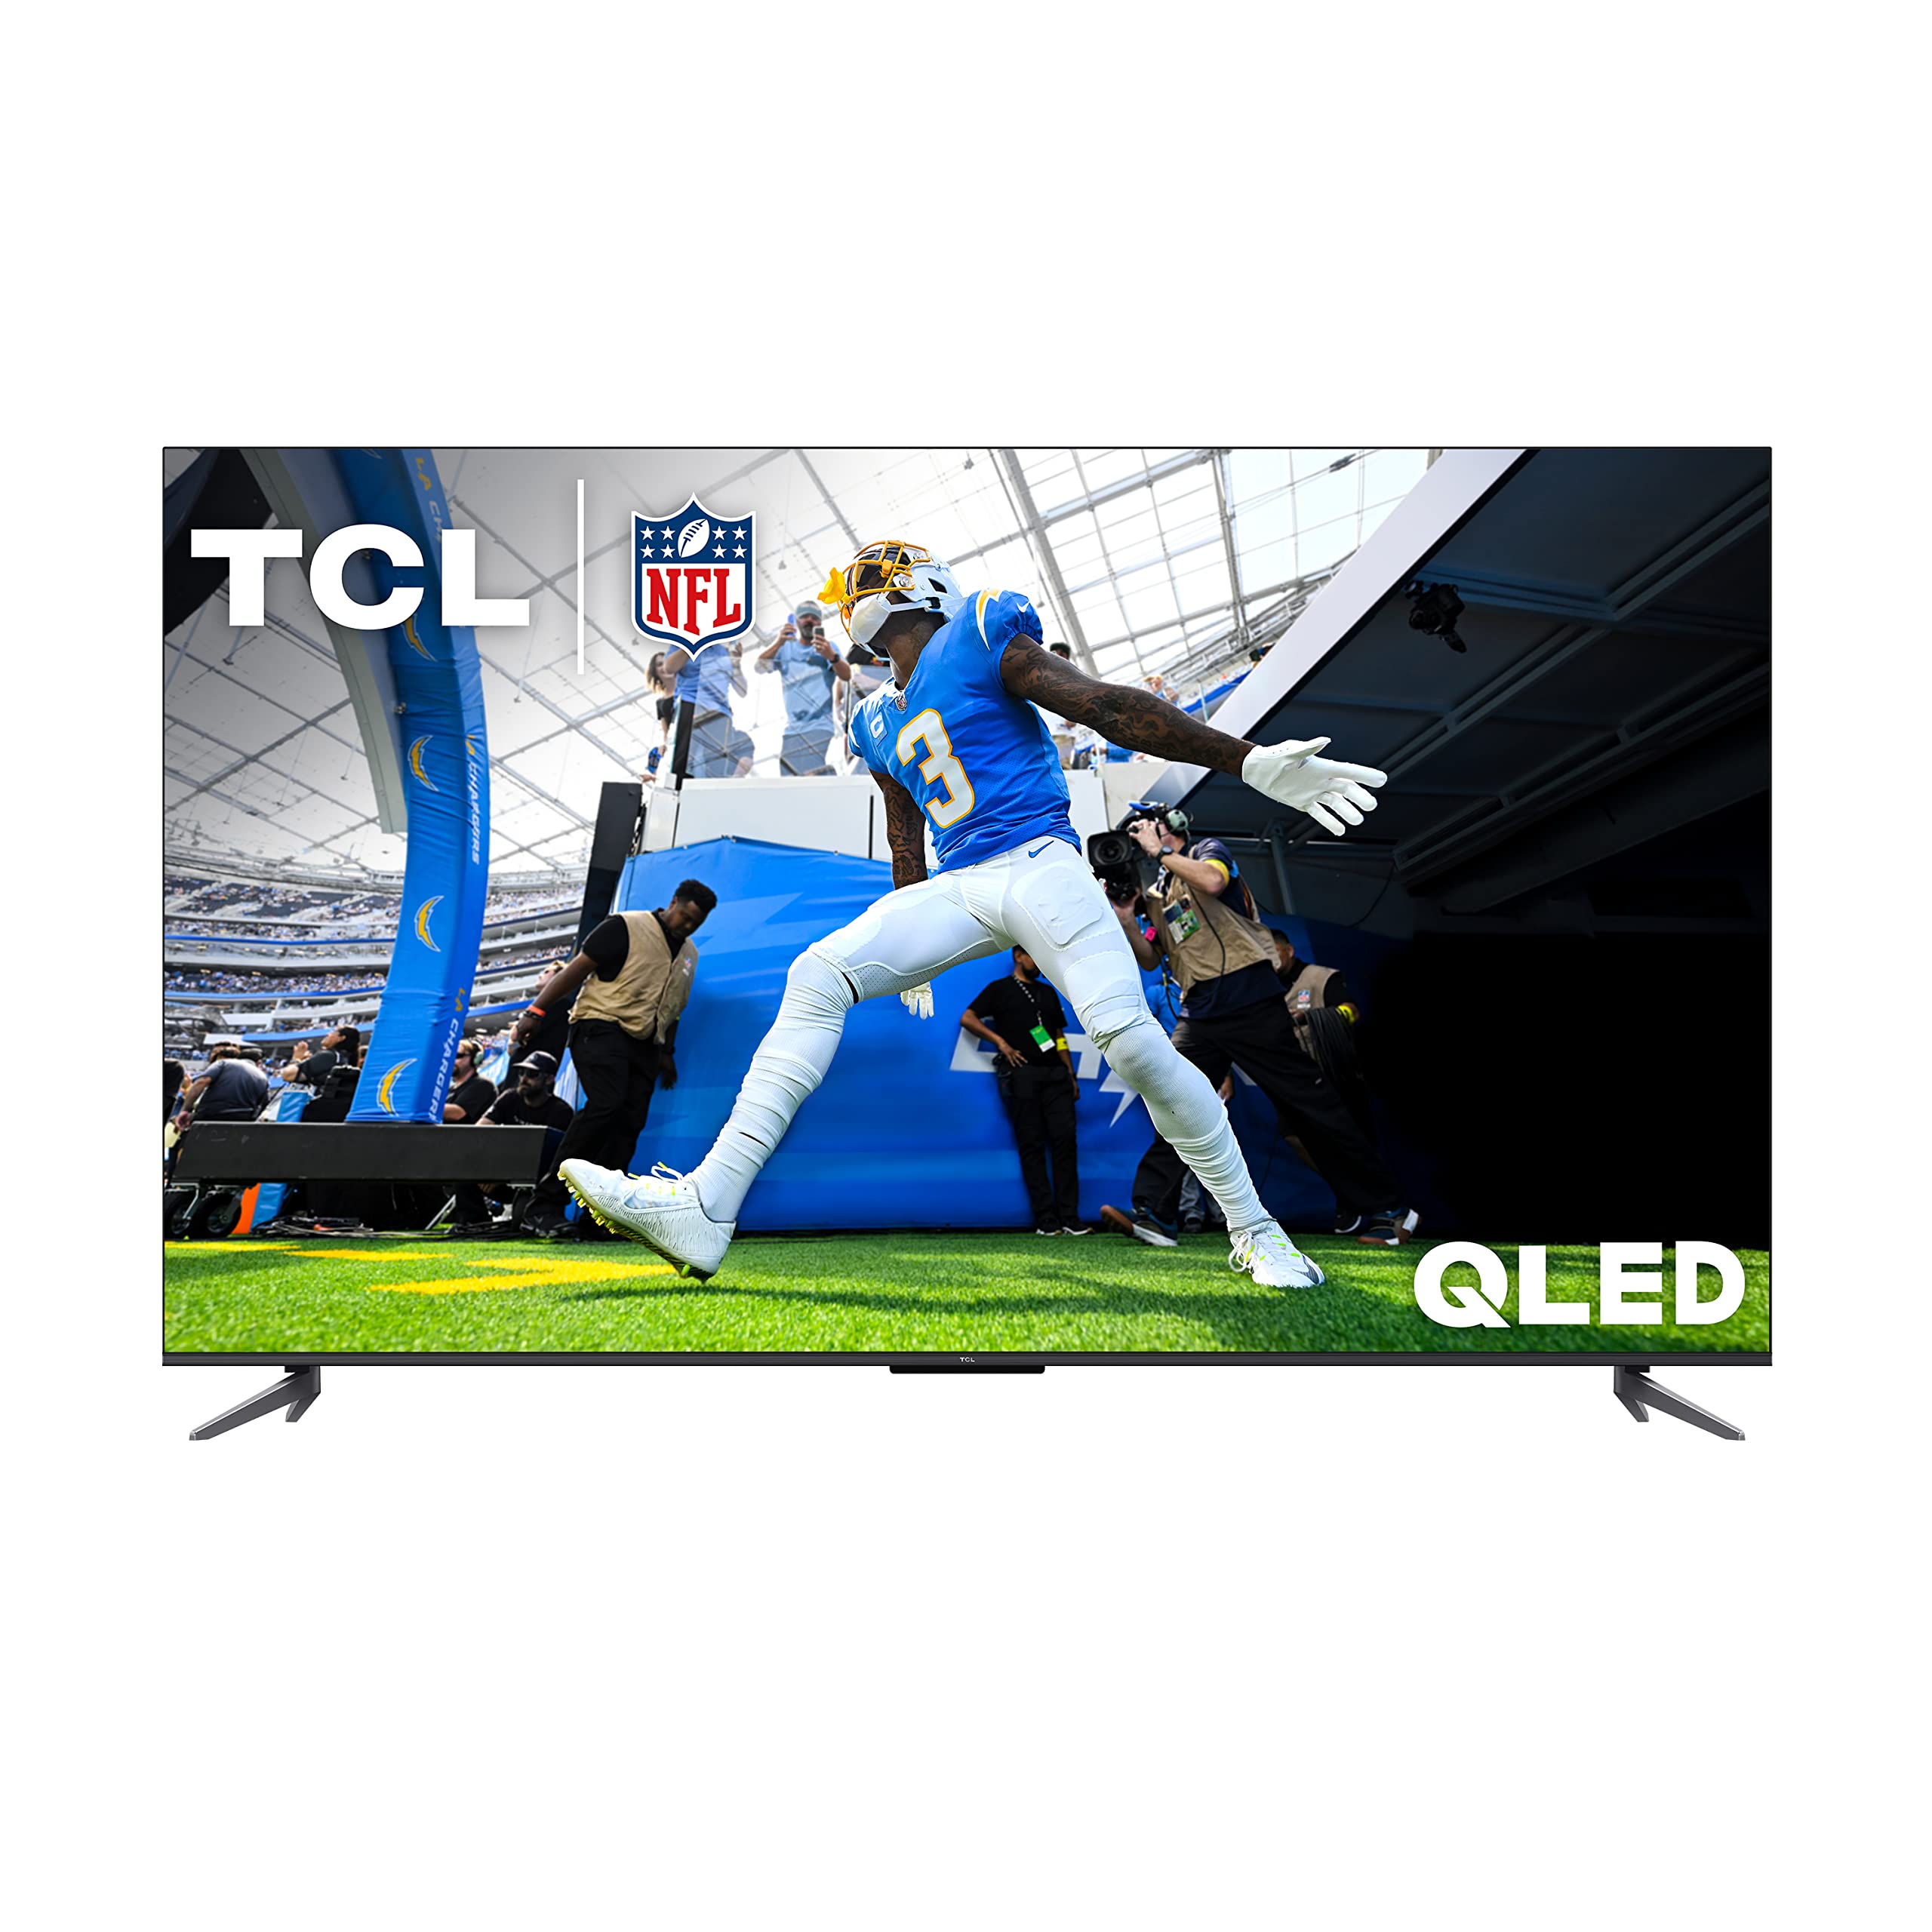 TCL Q6 Series QLED 4K Smart TV w/ Google TV: 55" $398, 65" $528, 75" $748 + Free Shipping